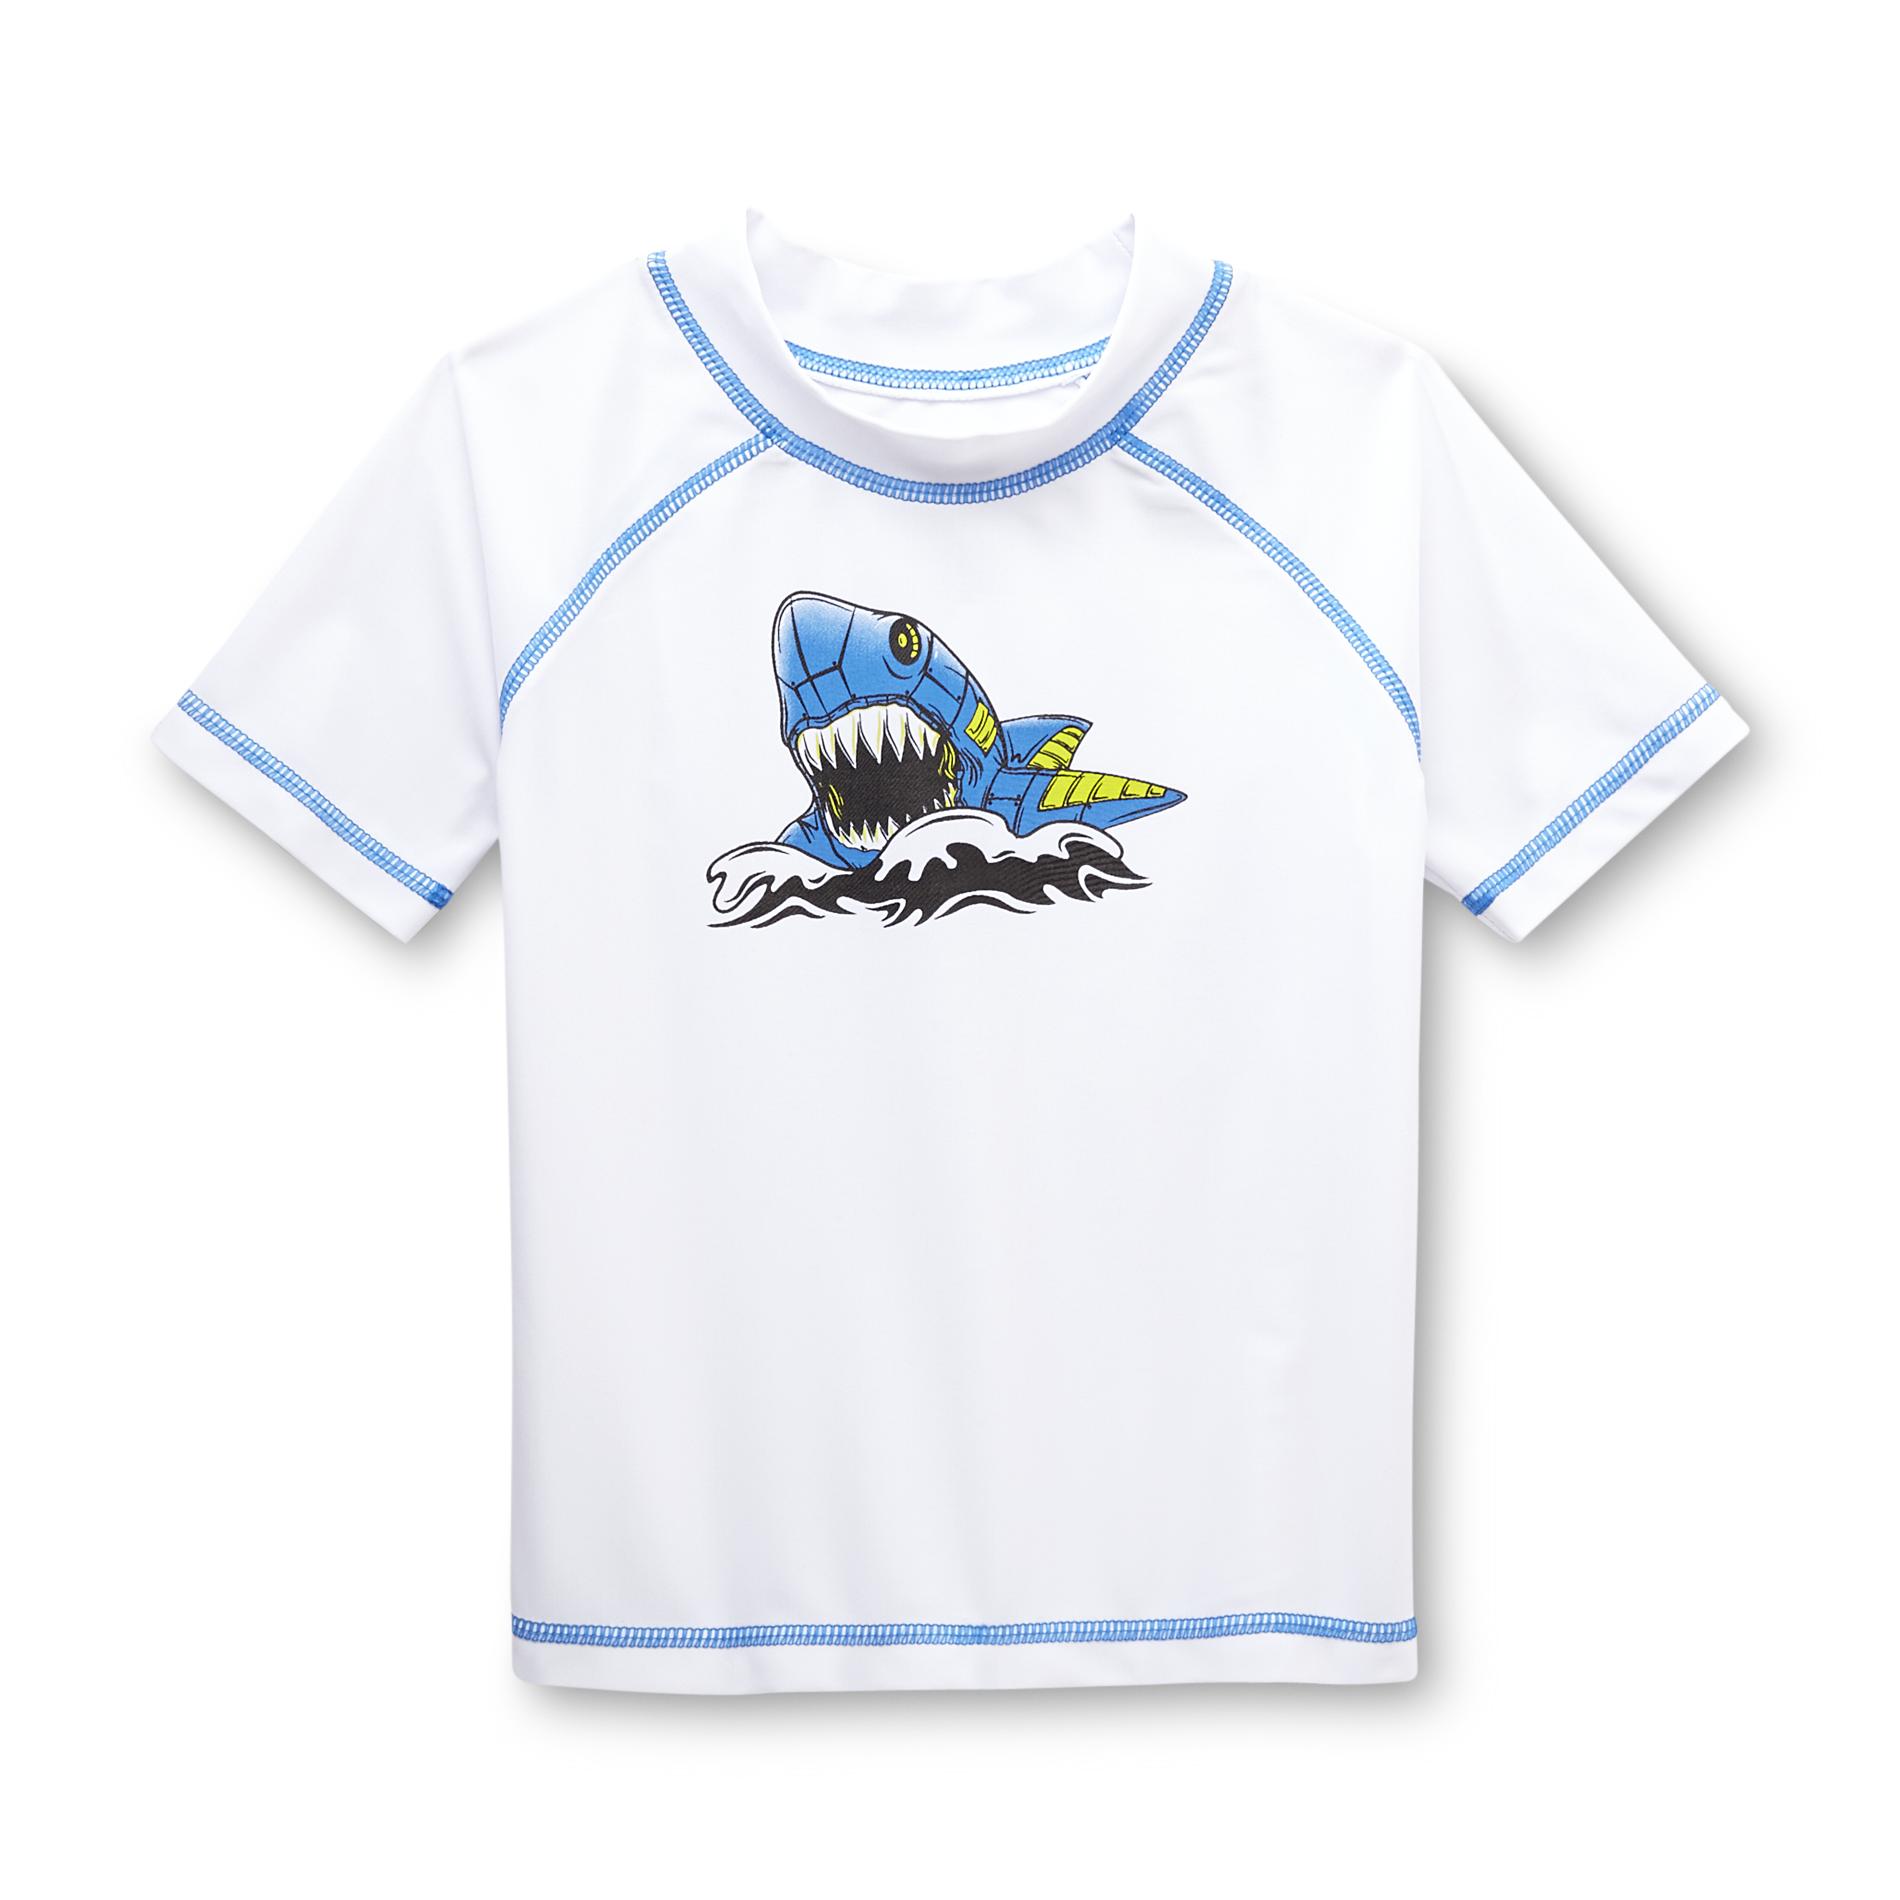 Joe Boxer Infant & Toddler Boy's Rash Guard Shirt - Shark